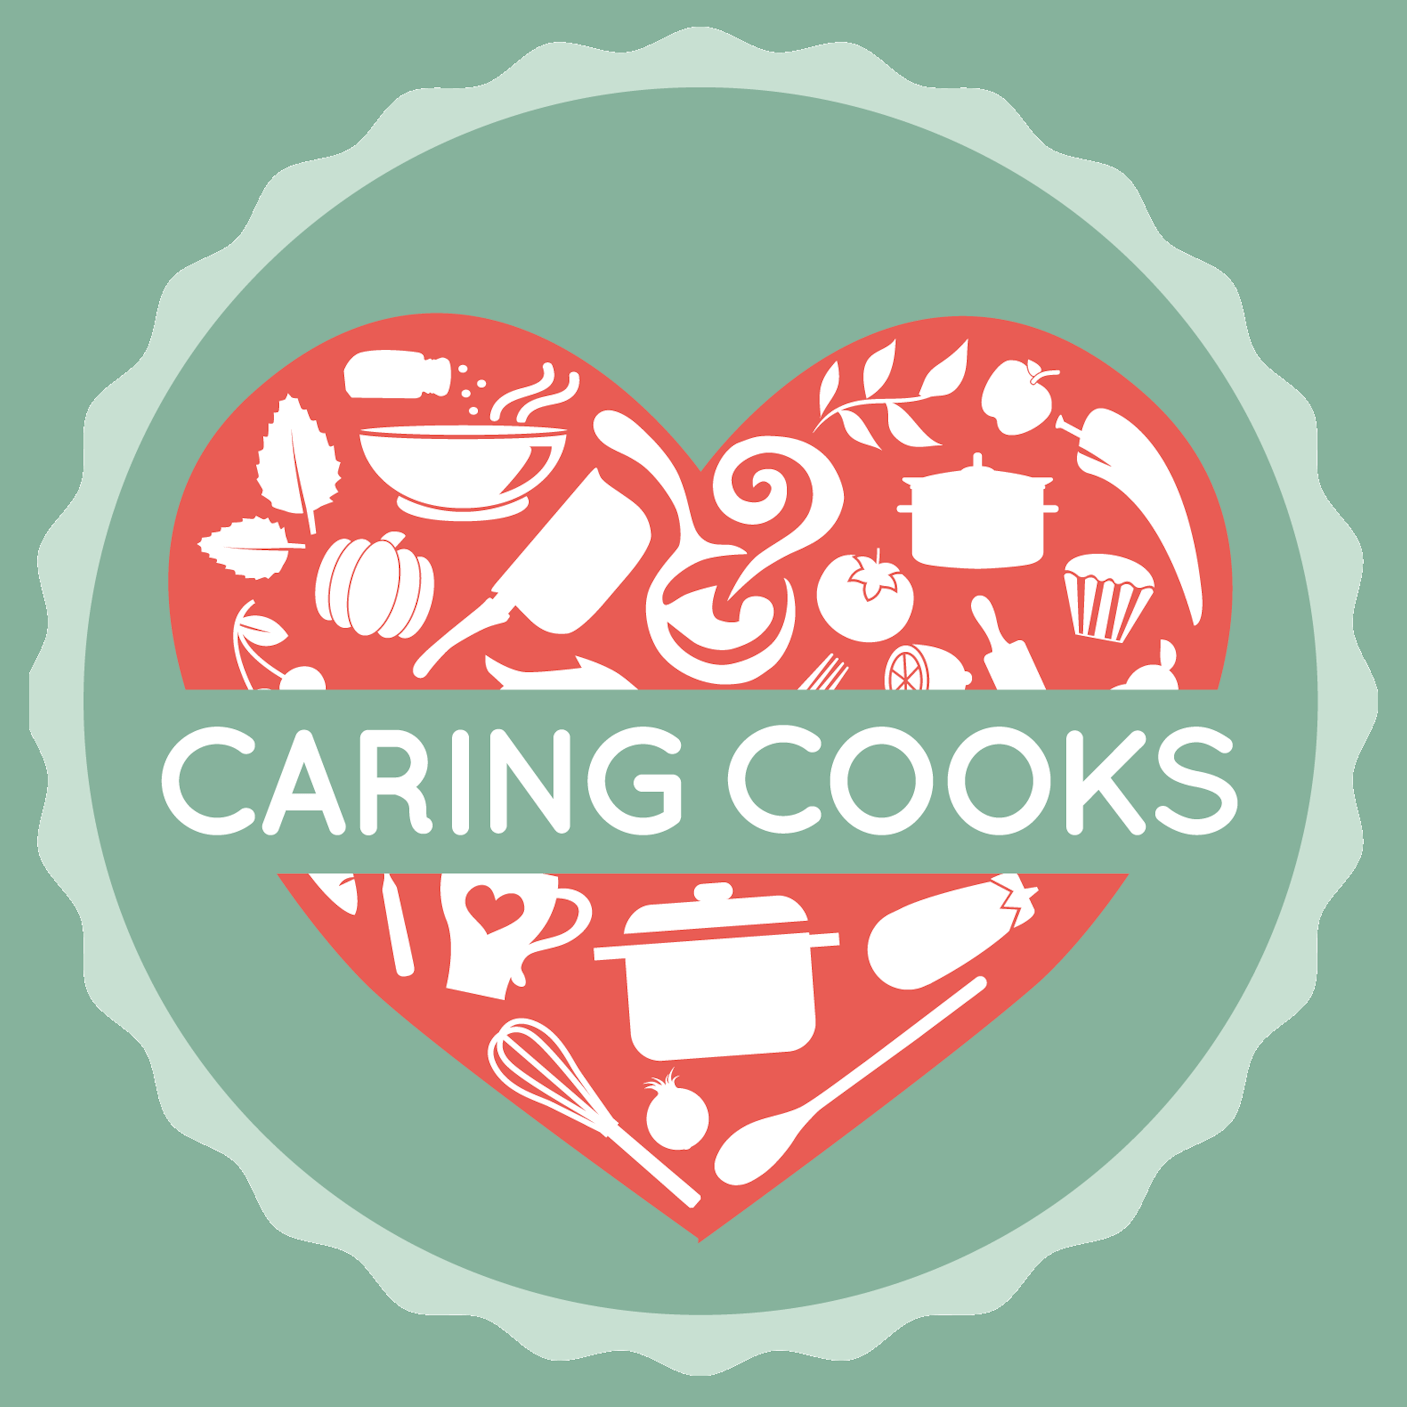 Caring cooks logo